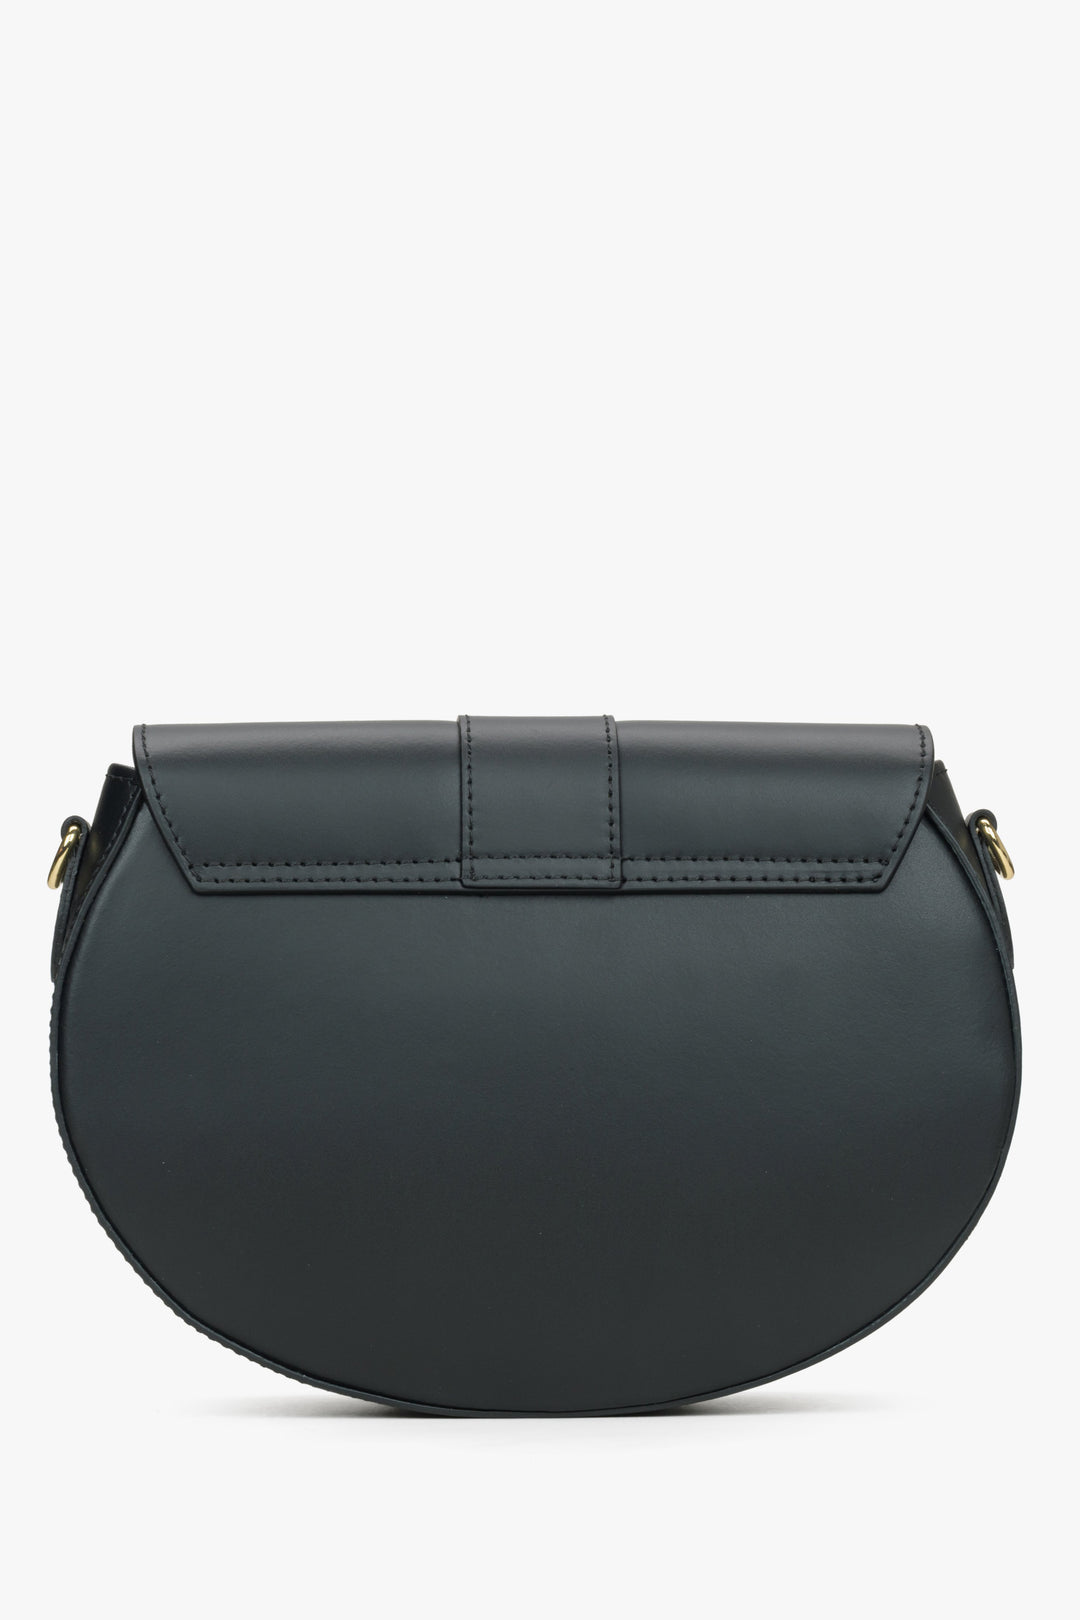 Women's black leather horseshoe-shaped bag by Estro - reverse side.